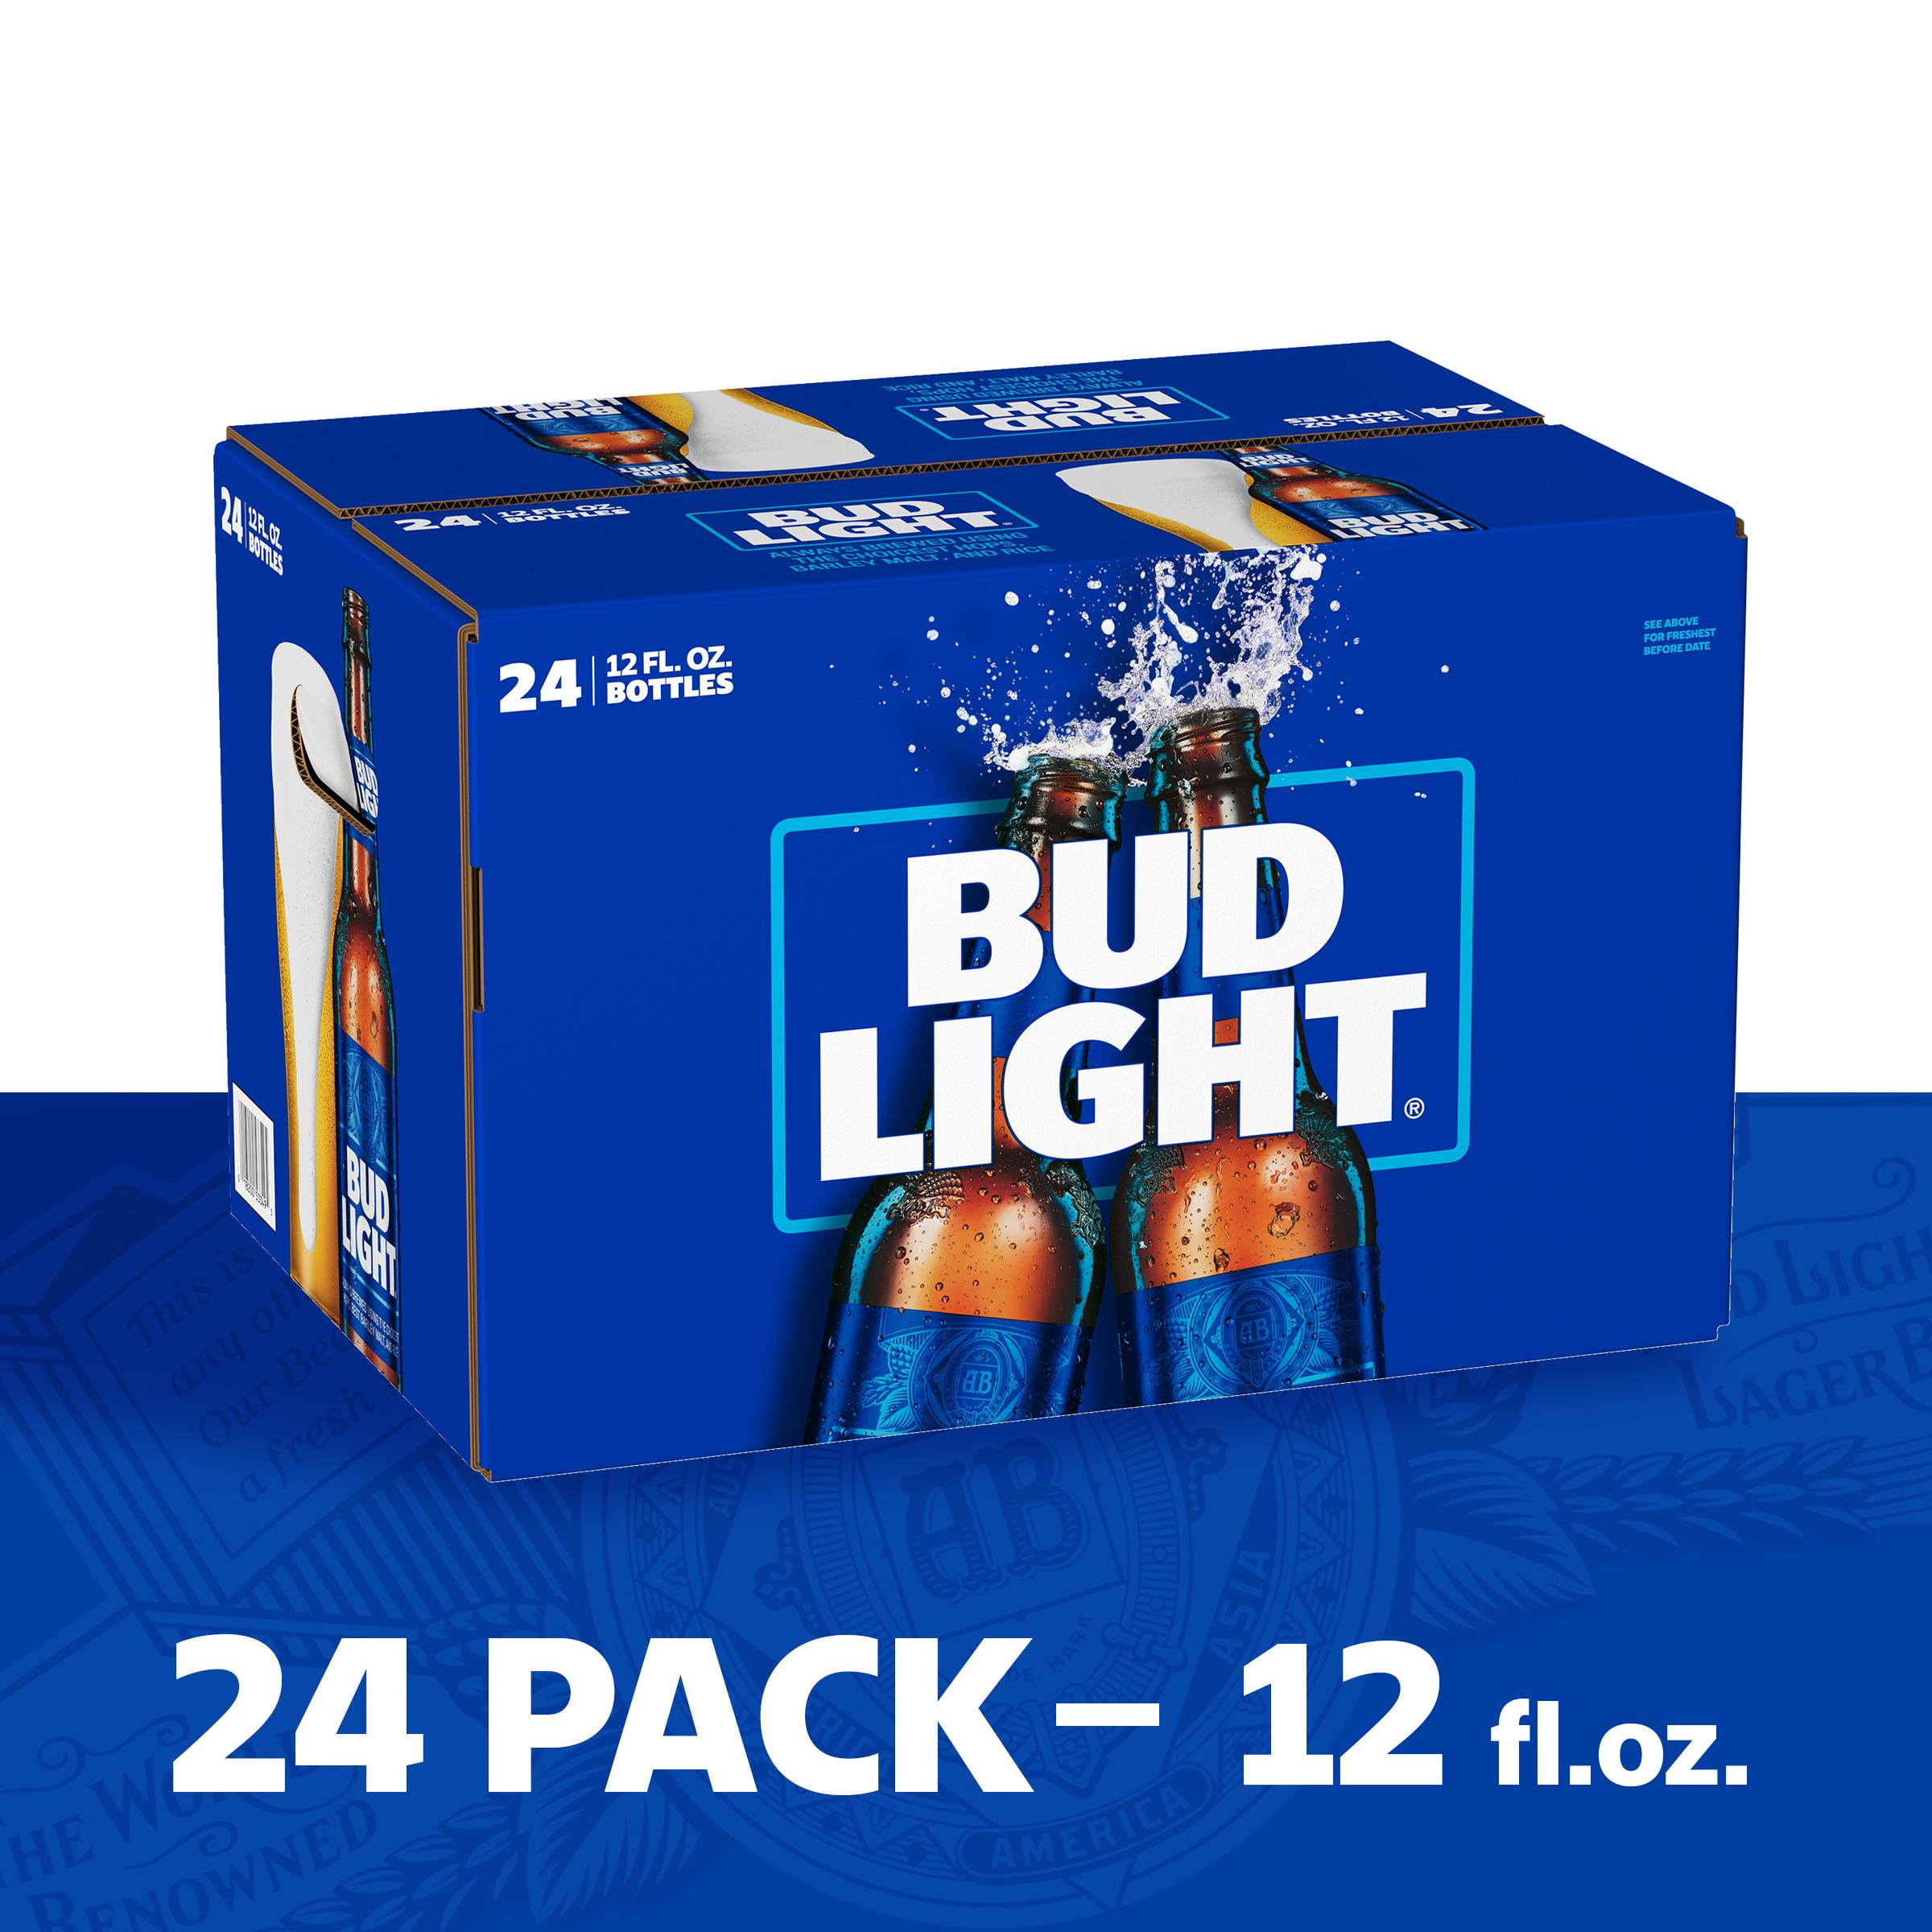 bud-light-beer-24-pack-beer-12-fl-oz-bottles-walmart-walmart